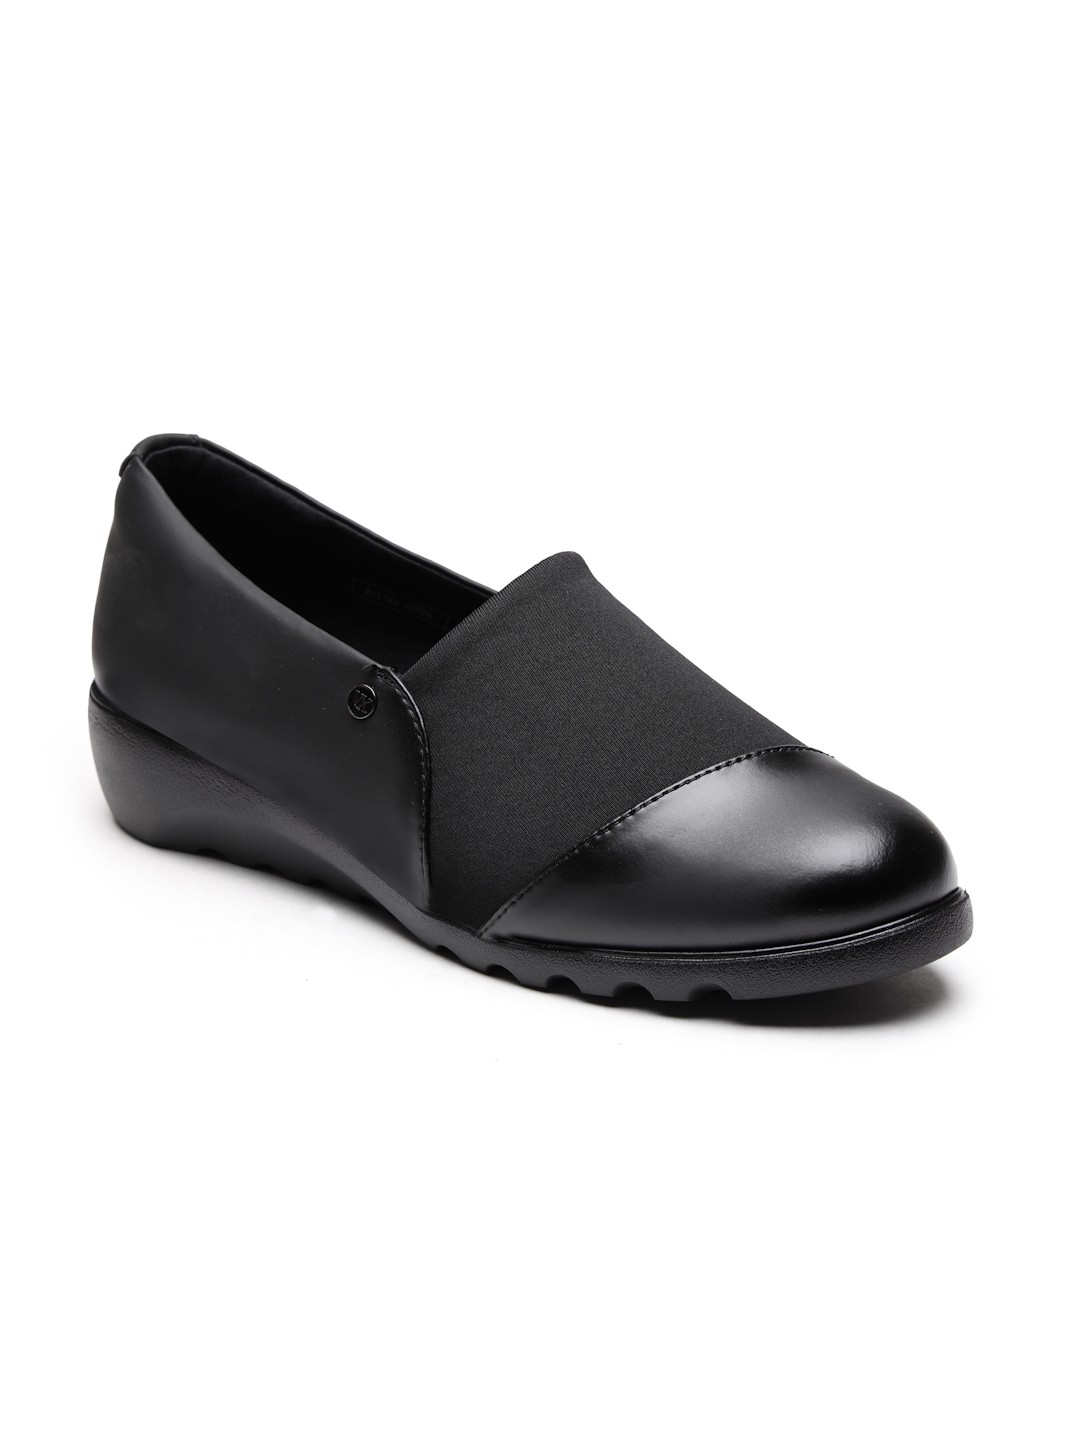 Buy Von Wellx Germany Comfort Women's Black Casual Shoes Ayla Online in West Bengal